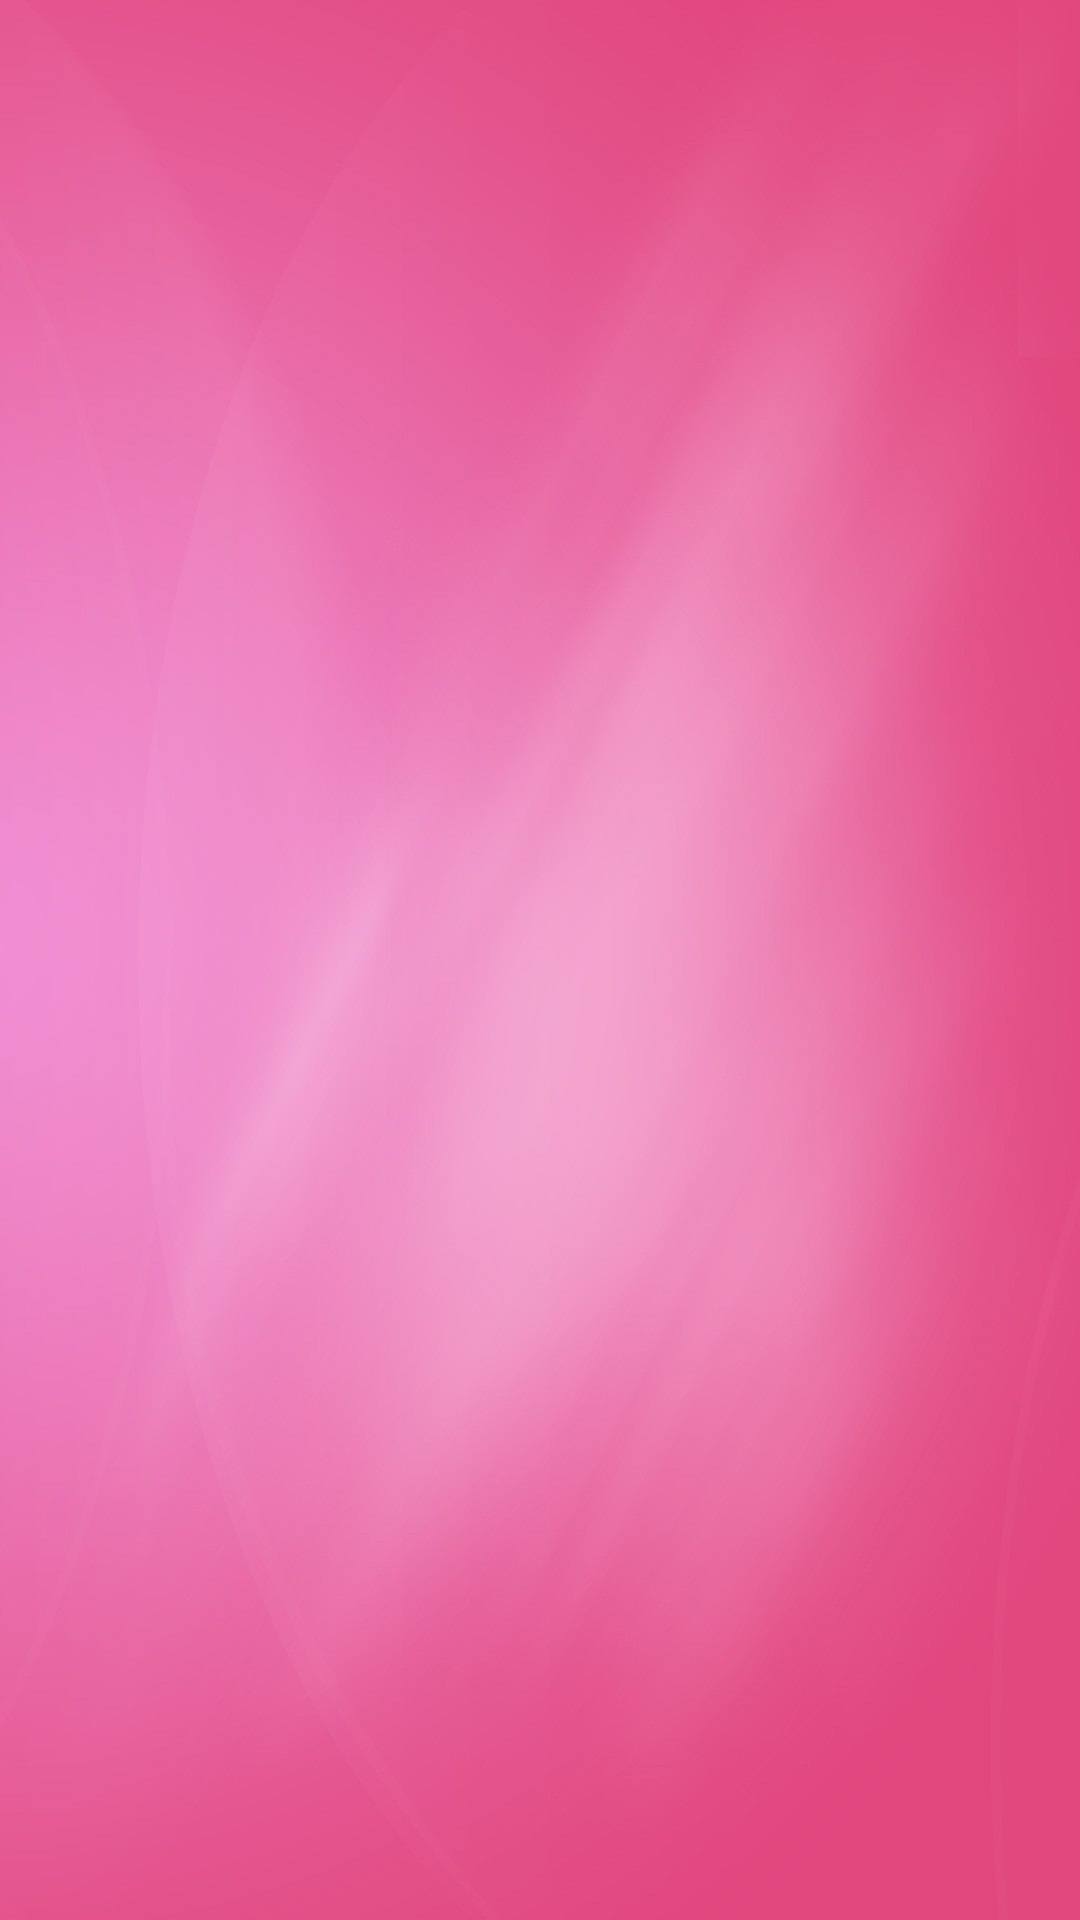 Hd Pink Iphone Wallpaper Resolution - Pink Iphone Wallpaper Hd - HD Wallpaper 